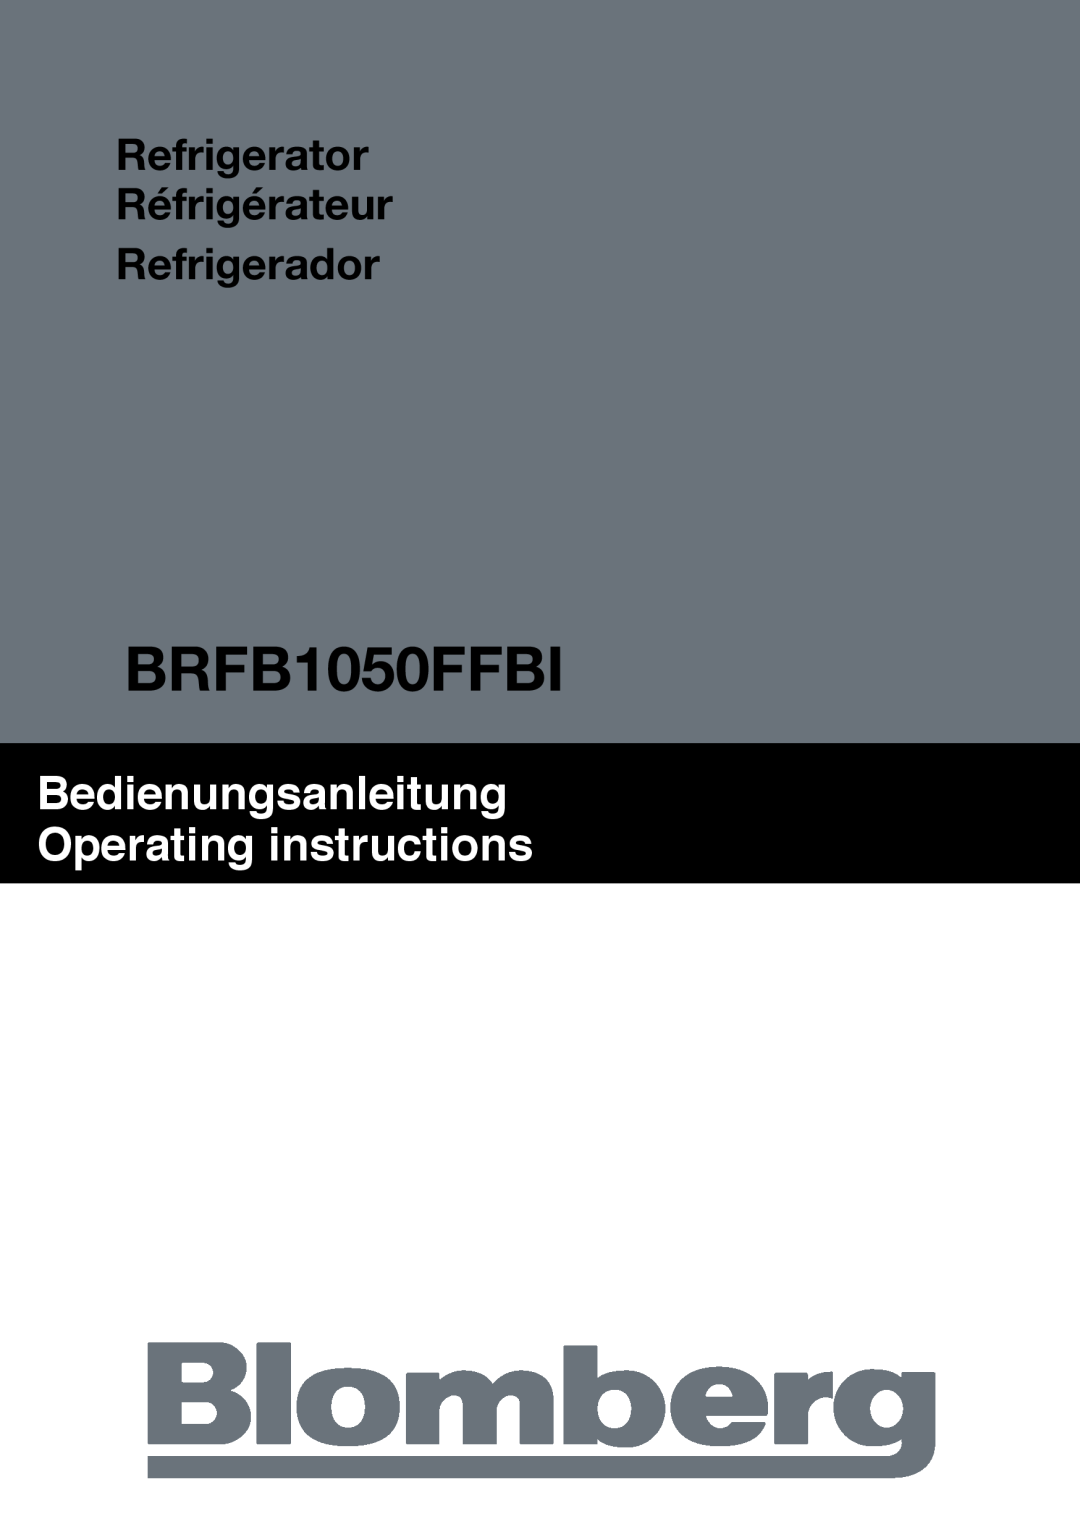 Blomberg BRFB1050FFBI manual Bedienungsanleitung Operating instructions, Refrigerator Réfrigérateur Refrigerador 